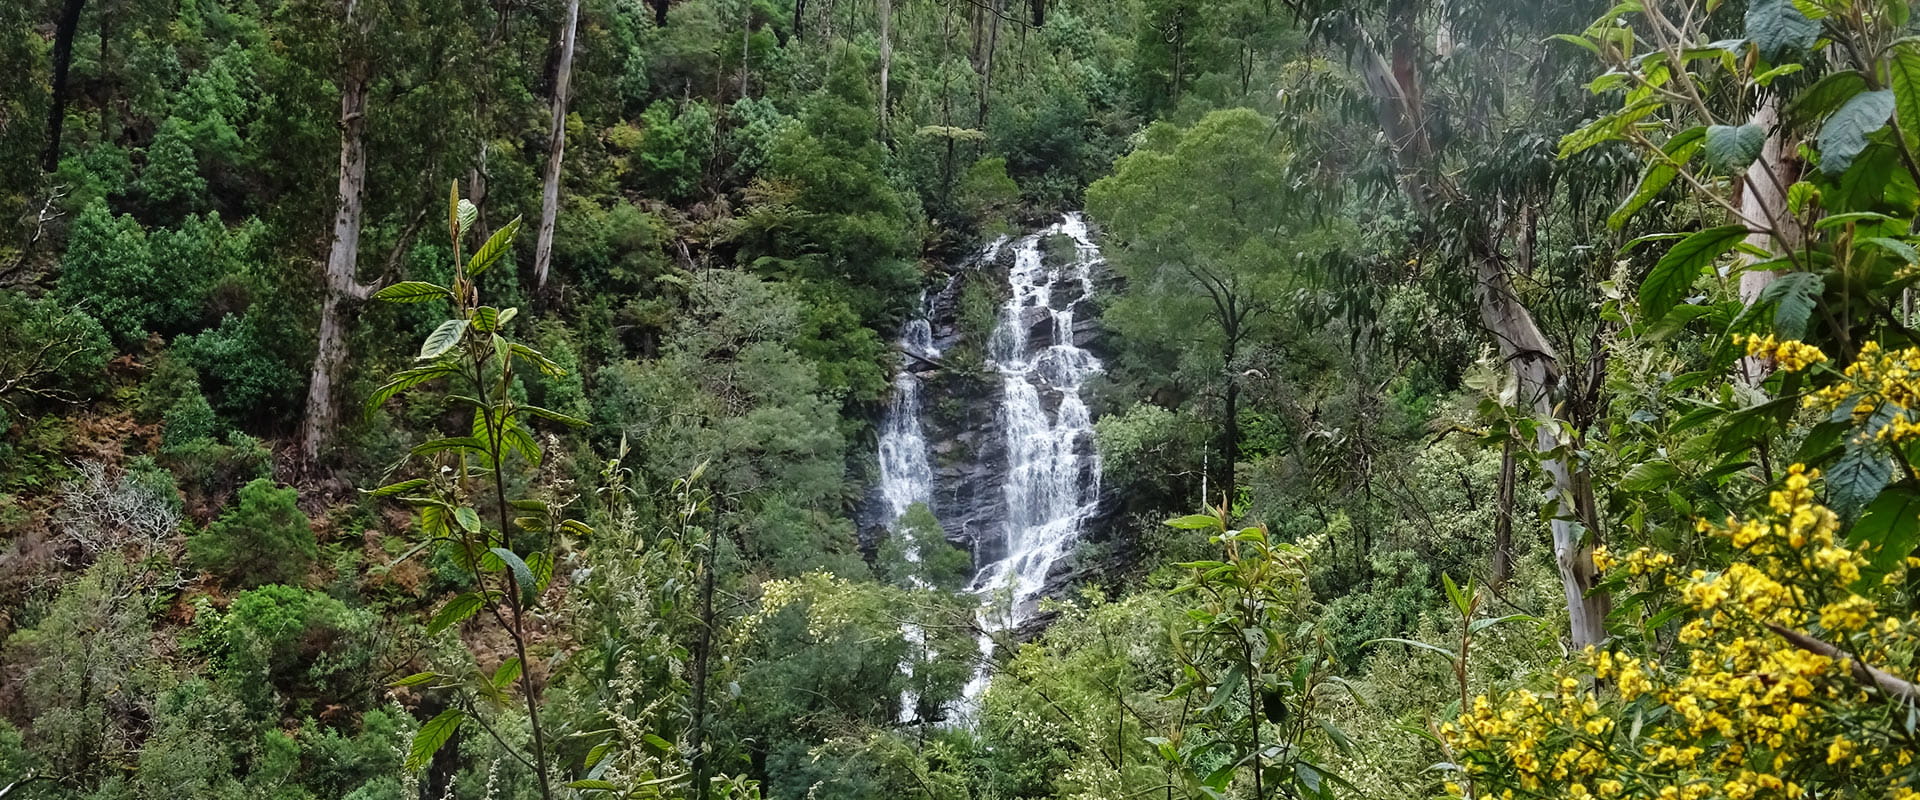 Water cascades down a steep waterfall in a lush temporate rainforest 